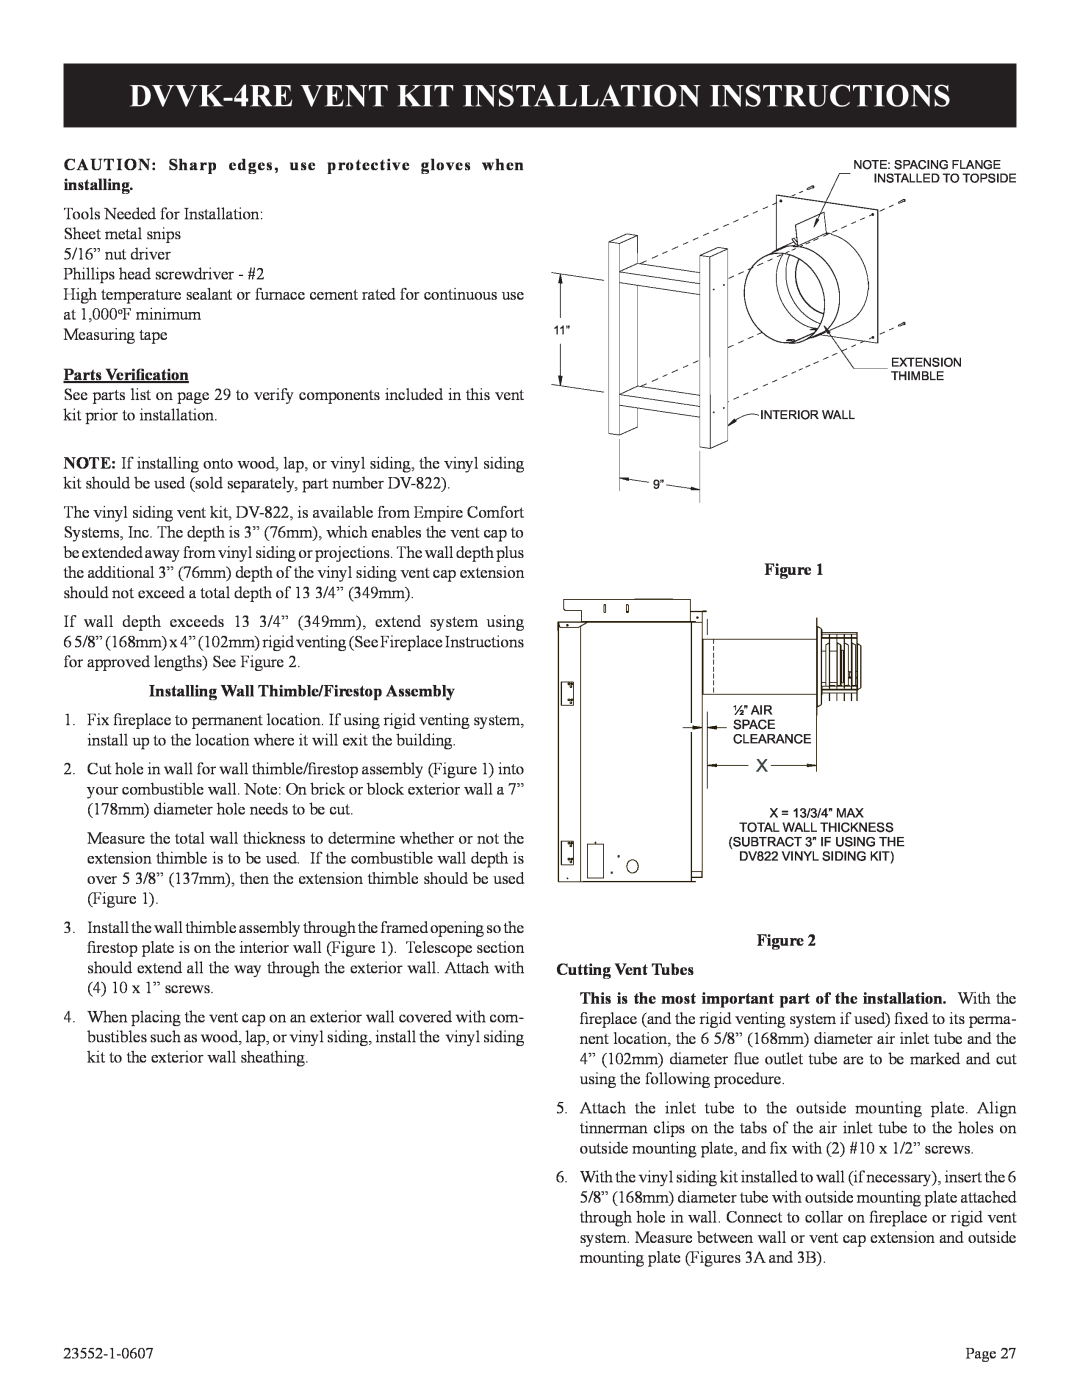 Empire Comfort Systems DVD36FP3 DVVK-4REVENT KIT INSTALLATION INSTRUCTIONS, Parts Veriﬁcation, Figure Cutting Vent Tubes 